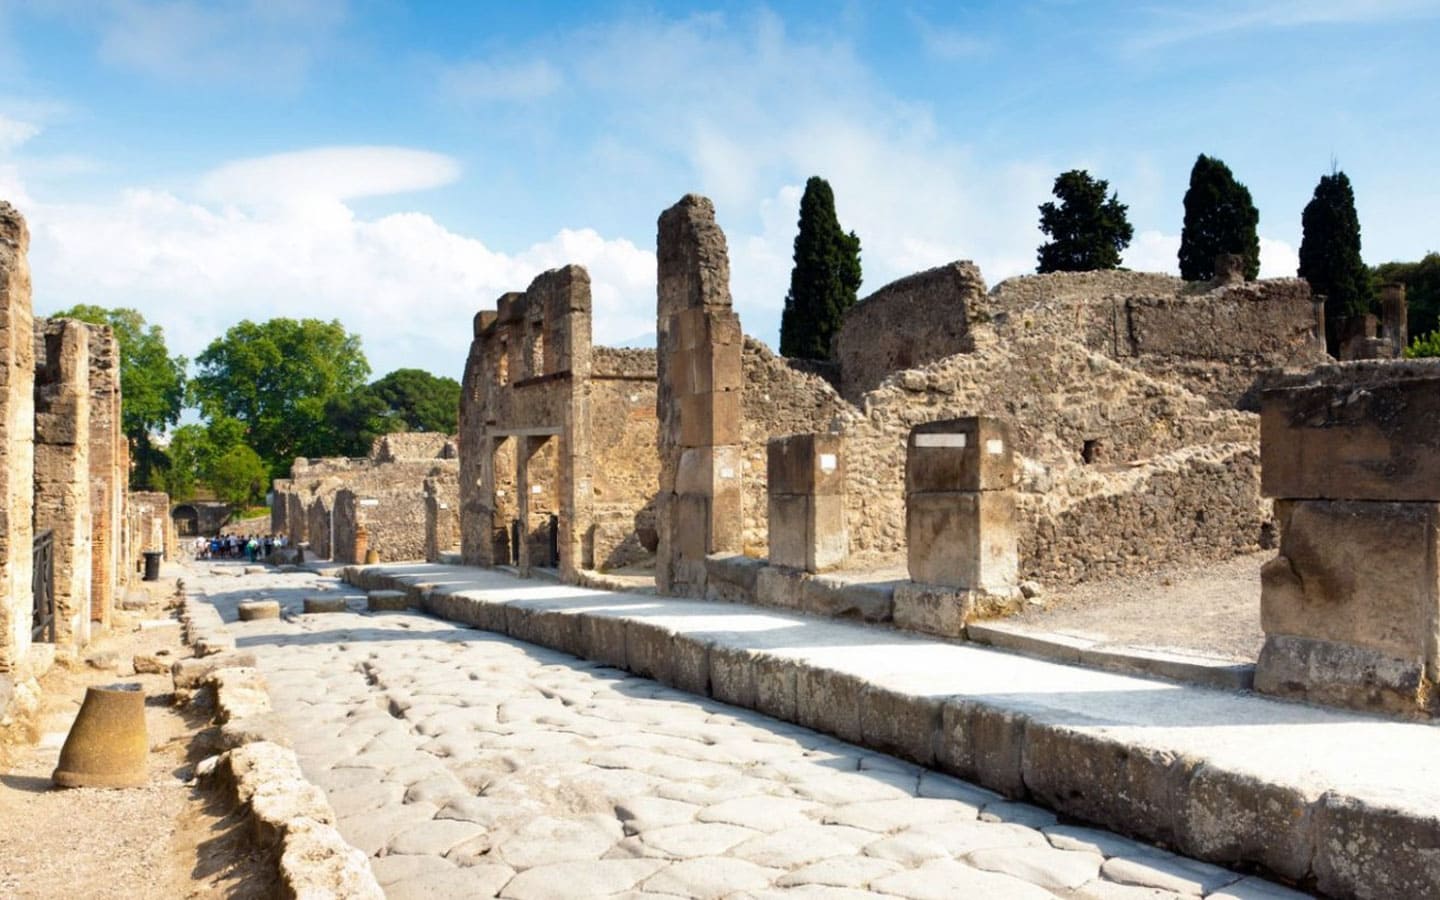 Pompeii, Herculaneum and Oplontis